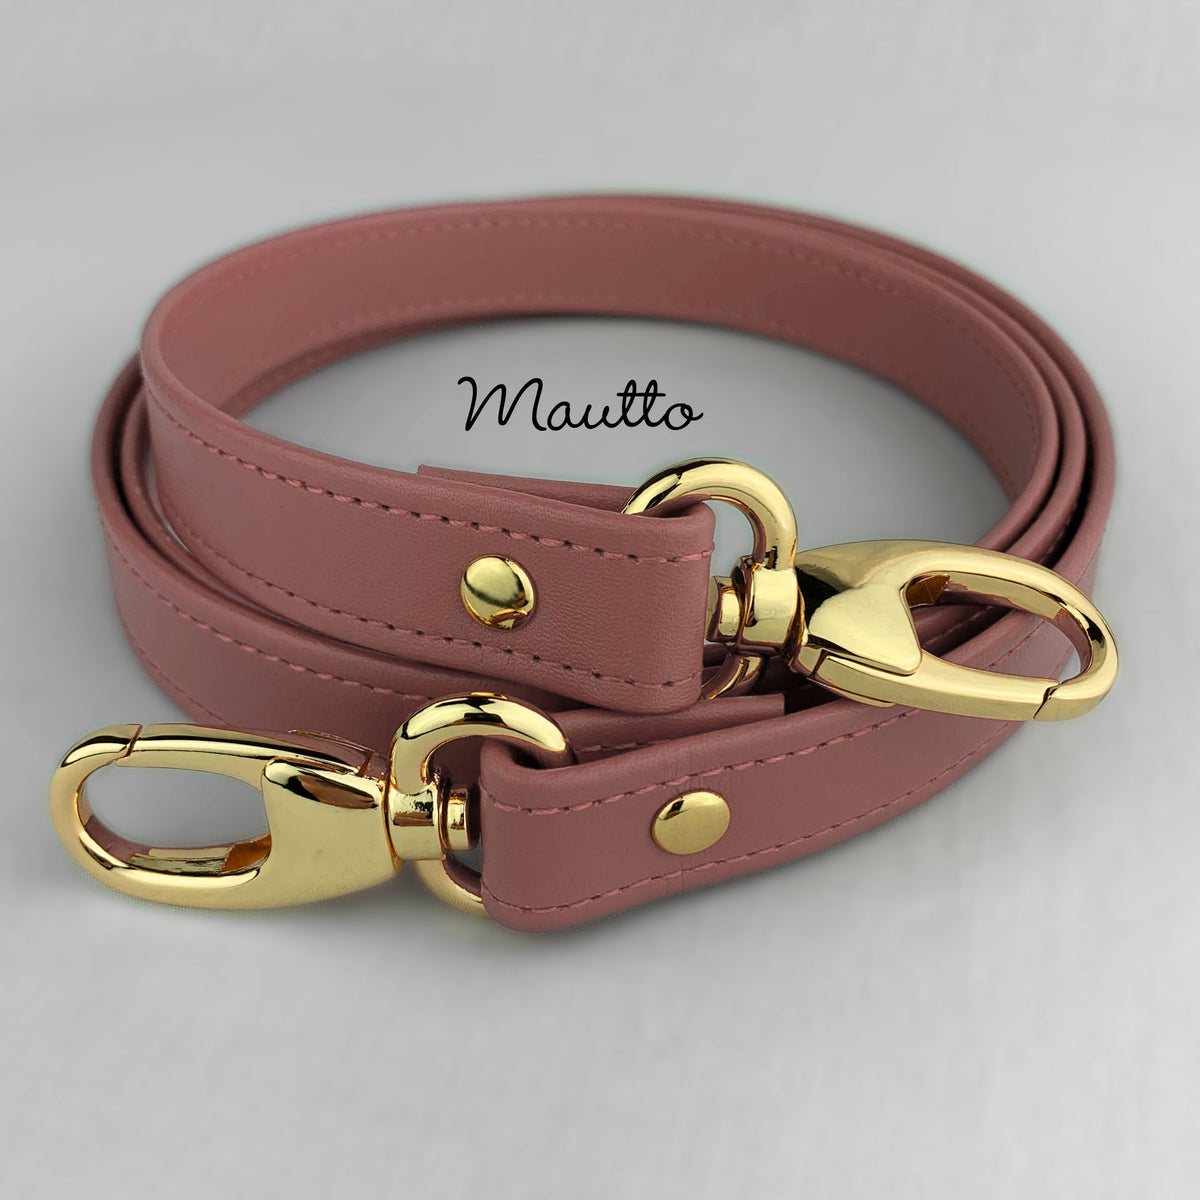 Mautto Black Leather Strap (13mm Petite Width) for LV Pochette, Alma, Eva Etc 20 Short Shoulder / Gold-Tone